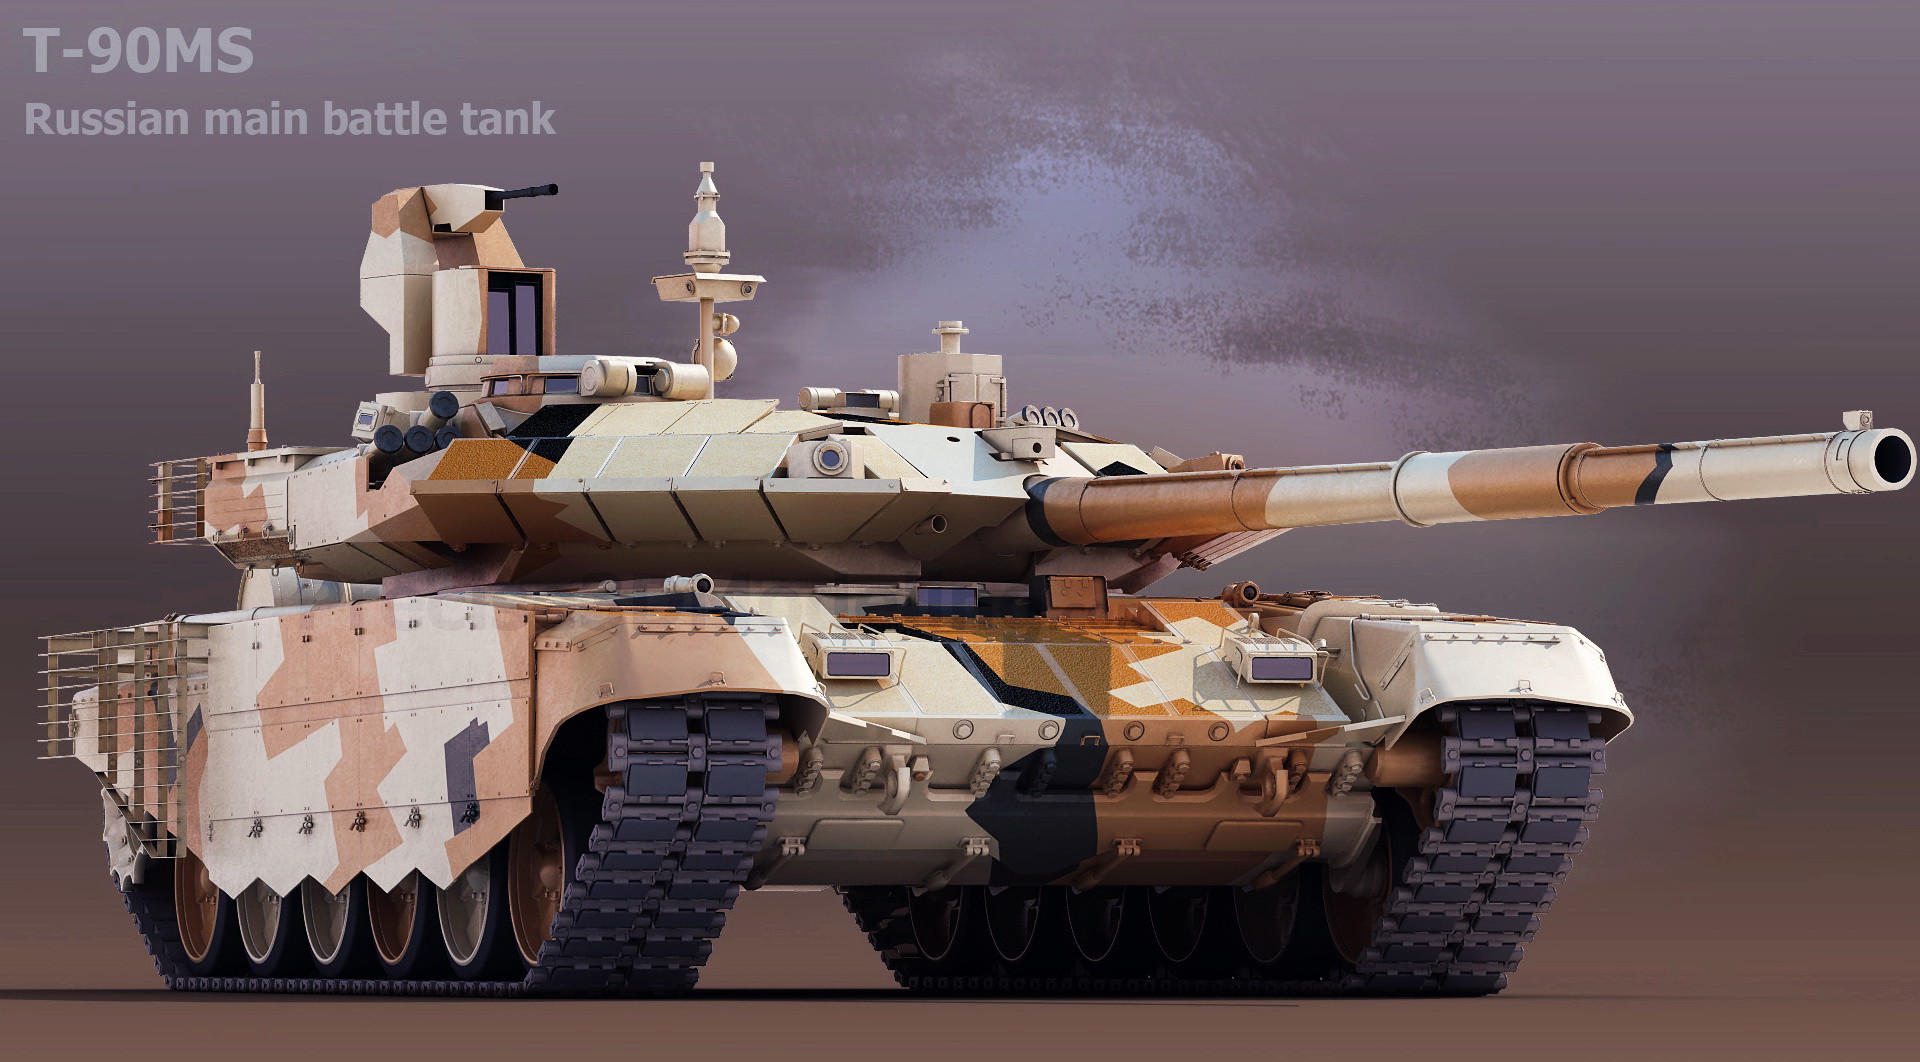 Танк Т-90МС «Прорыв» против «Абрамса» - кто сильнее? 